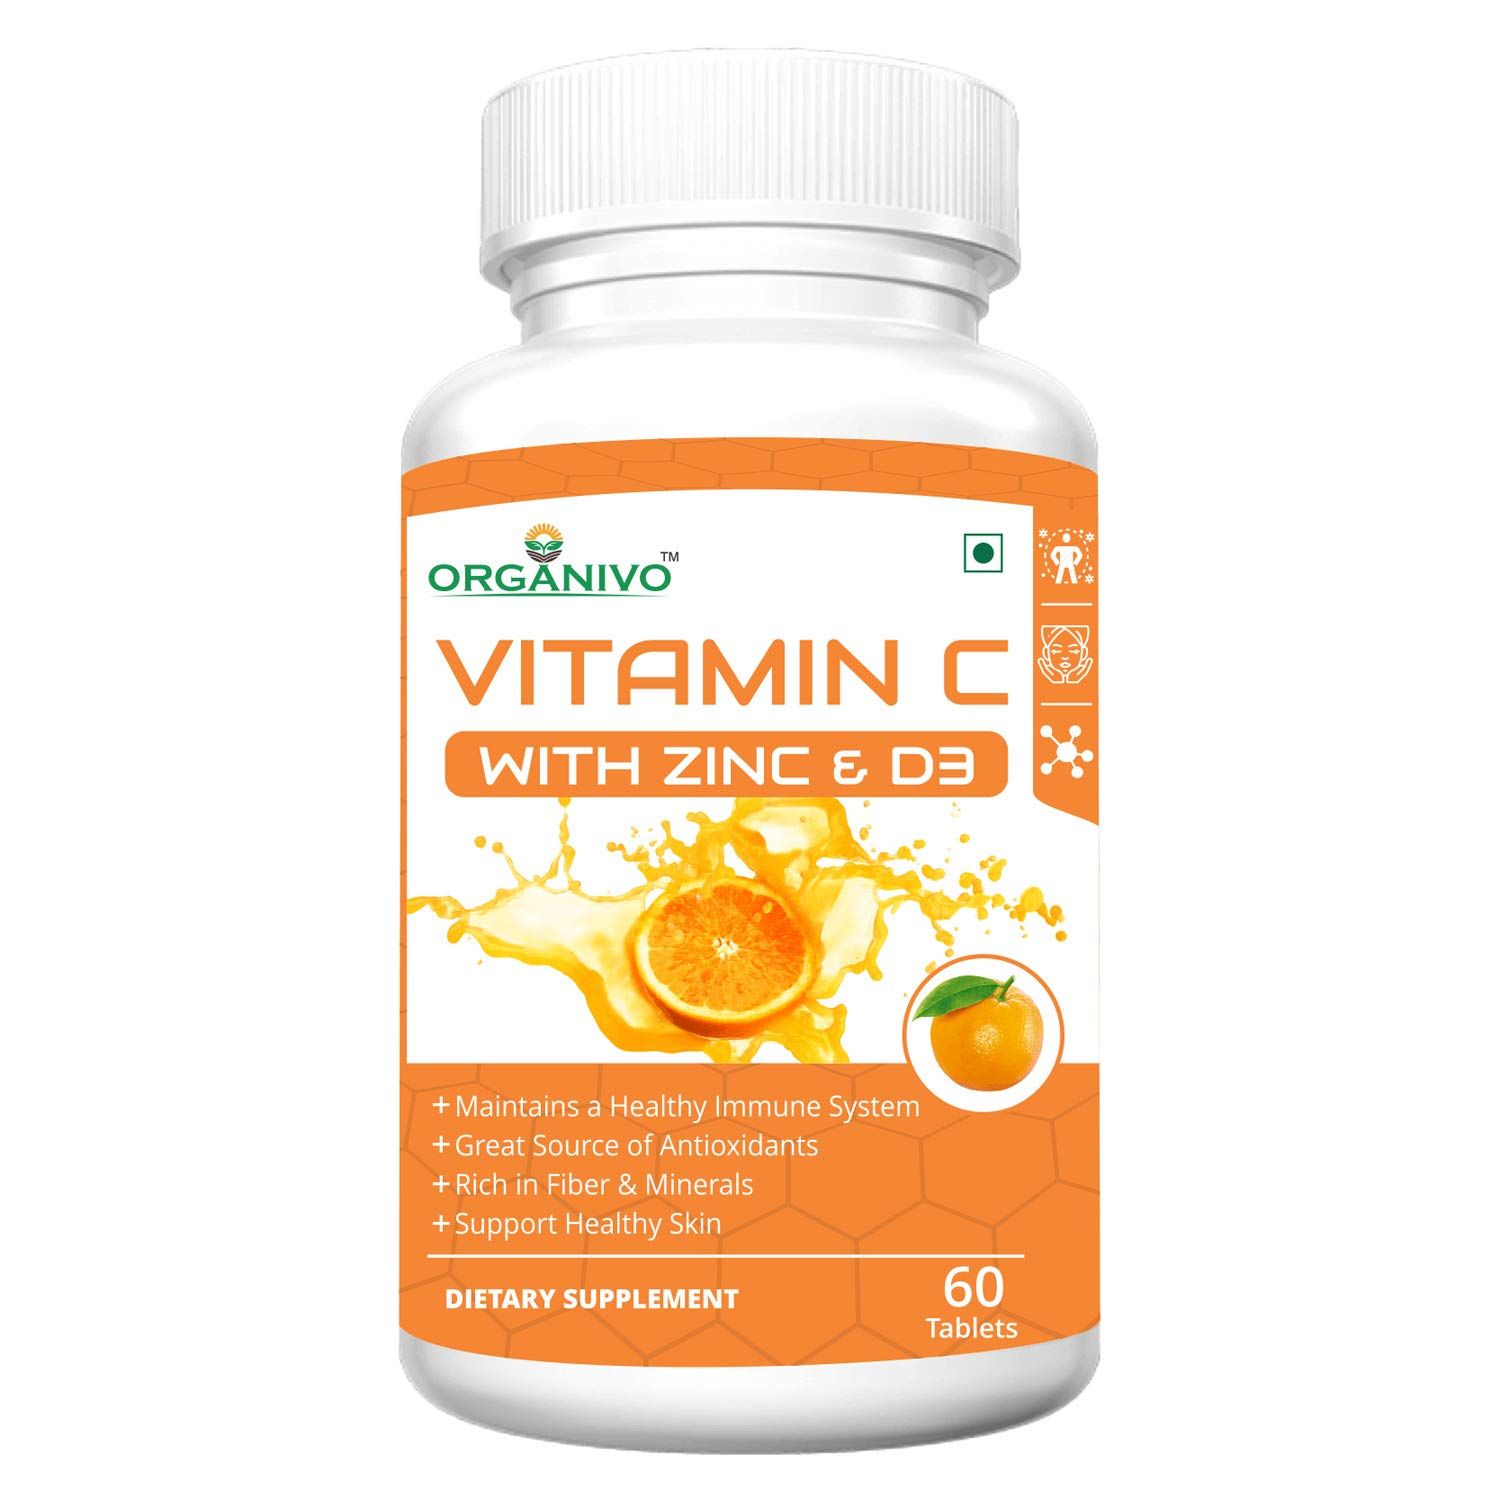 Organivo Vitamin C With Zinc & D3 Image